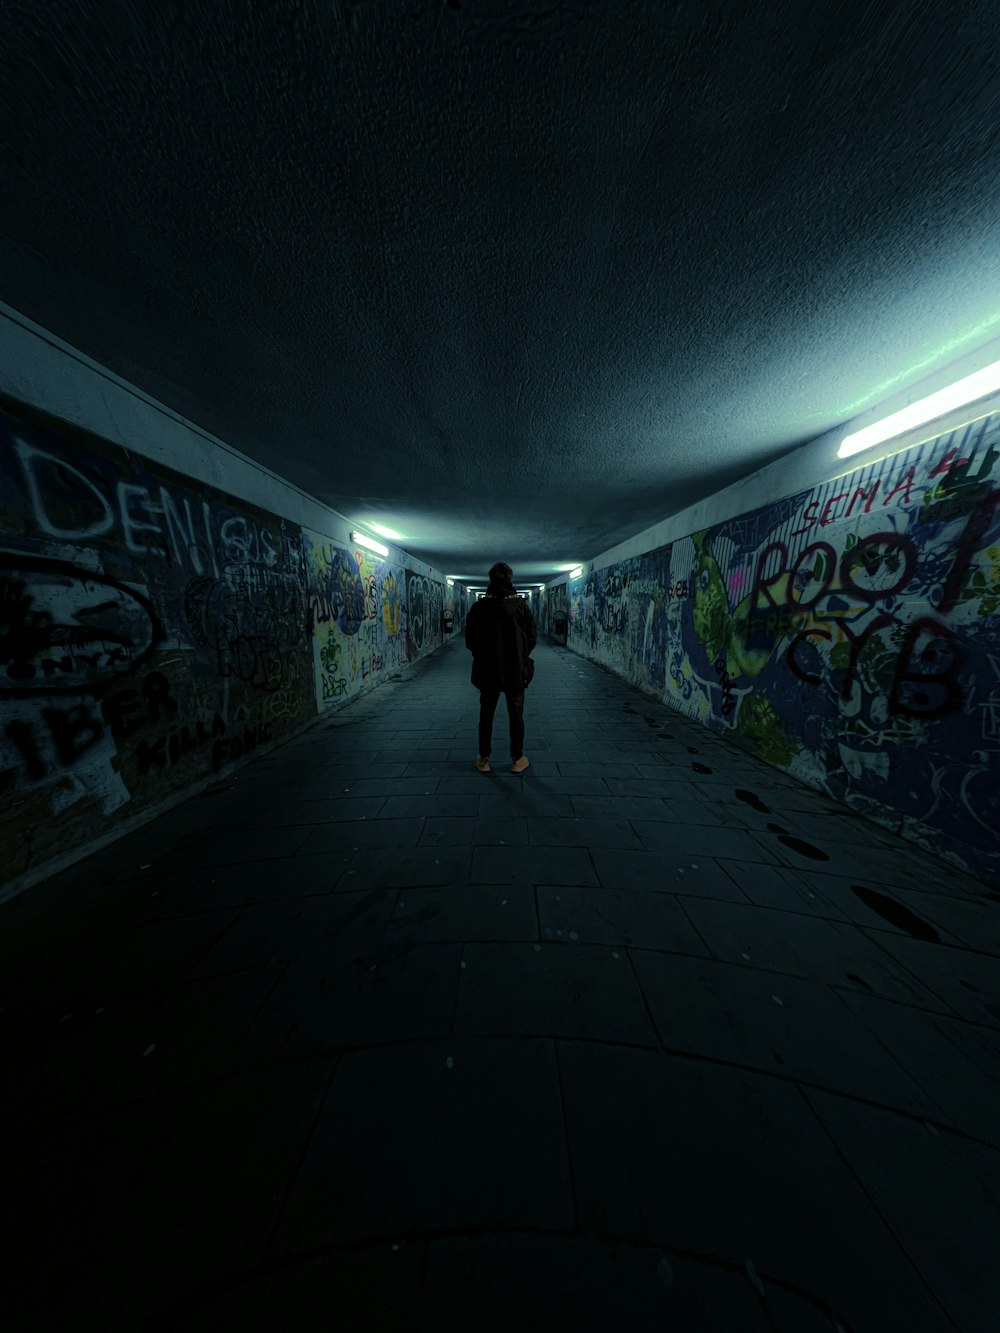 a man walking down a dark tunnel covered in graffiti